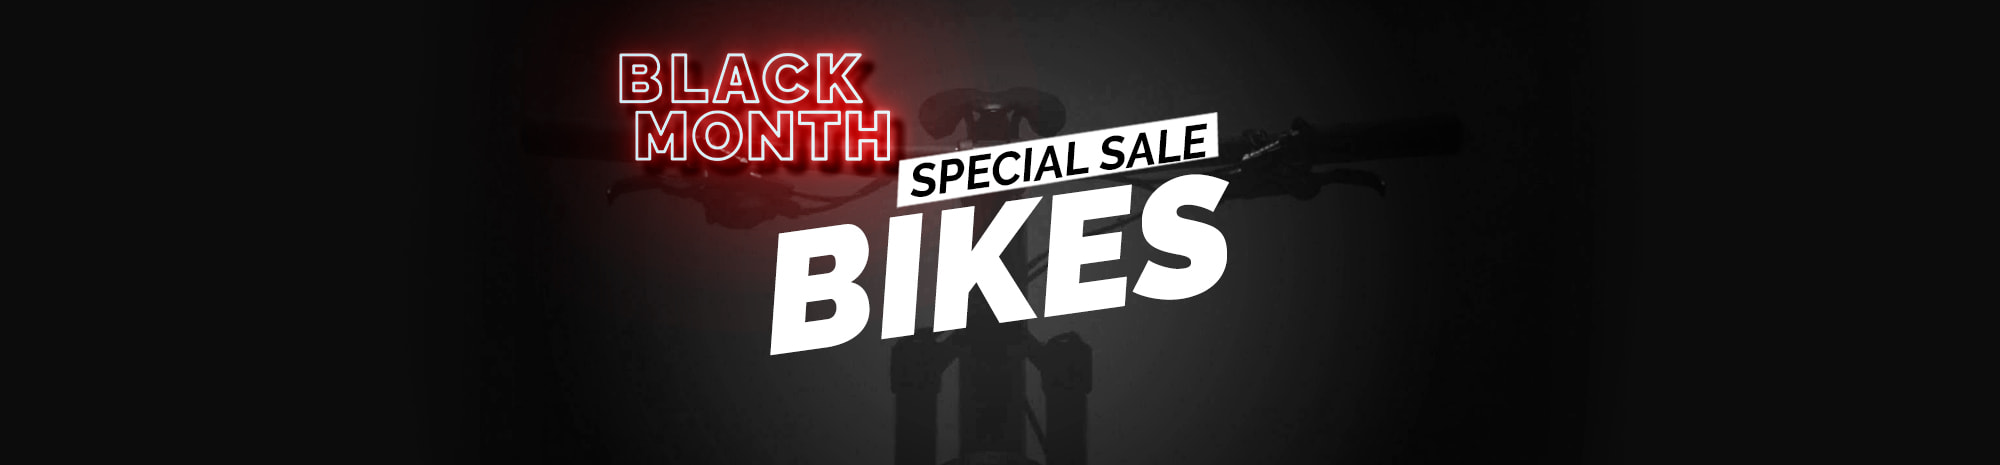 Special Black Friday Sale